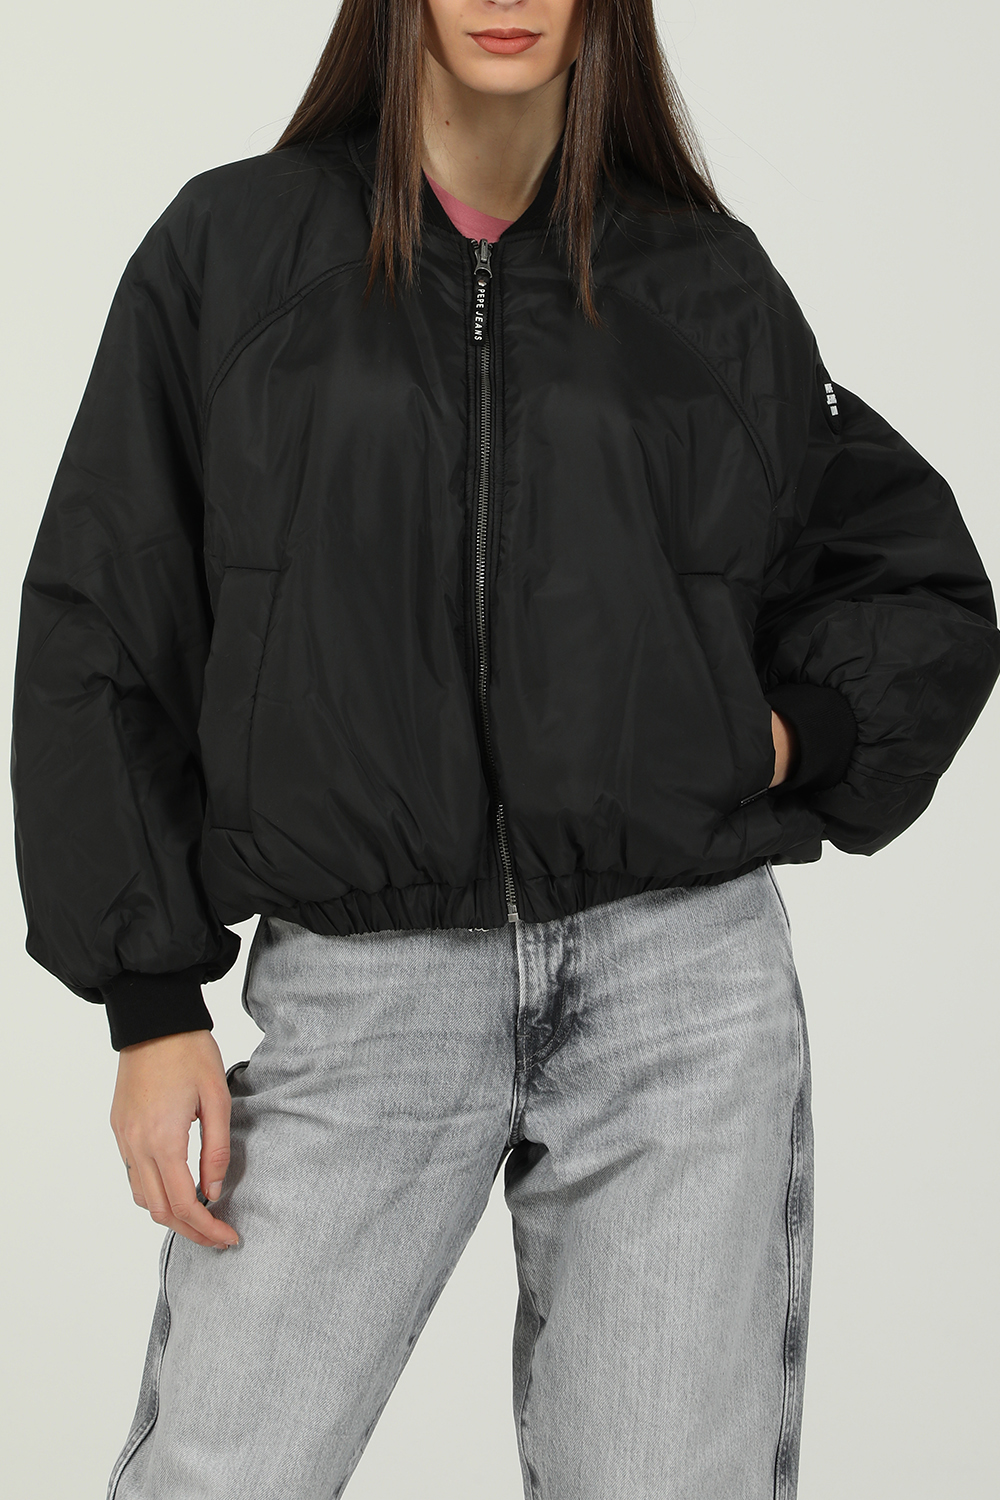 PEPE JEANS – Γυναικείο jacket PEPE JEANS AIDA μαύρο 1822892.0-0071